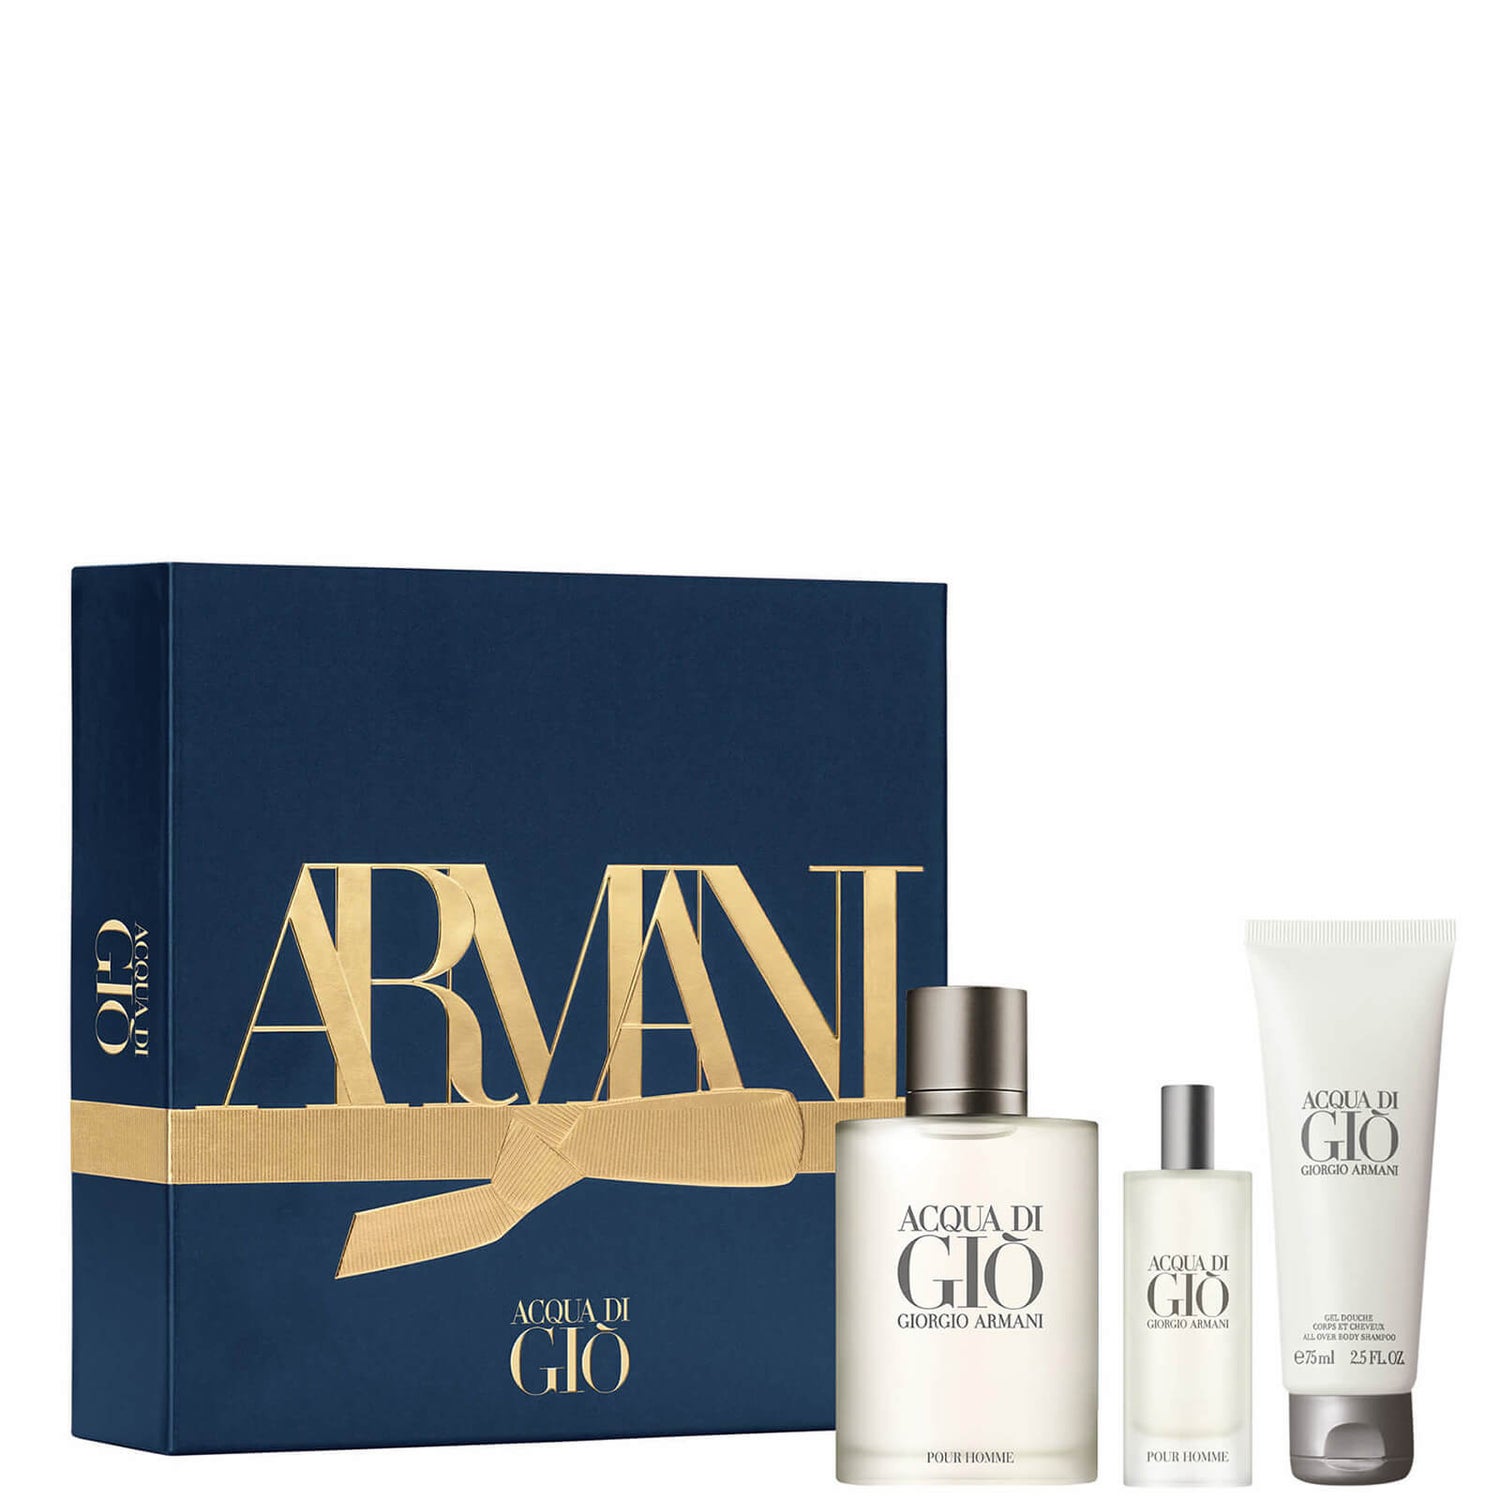 Armani Acqua Di Gio 100ml Christmas Gift Set (Worth £120.00)